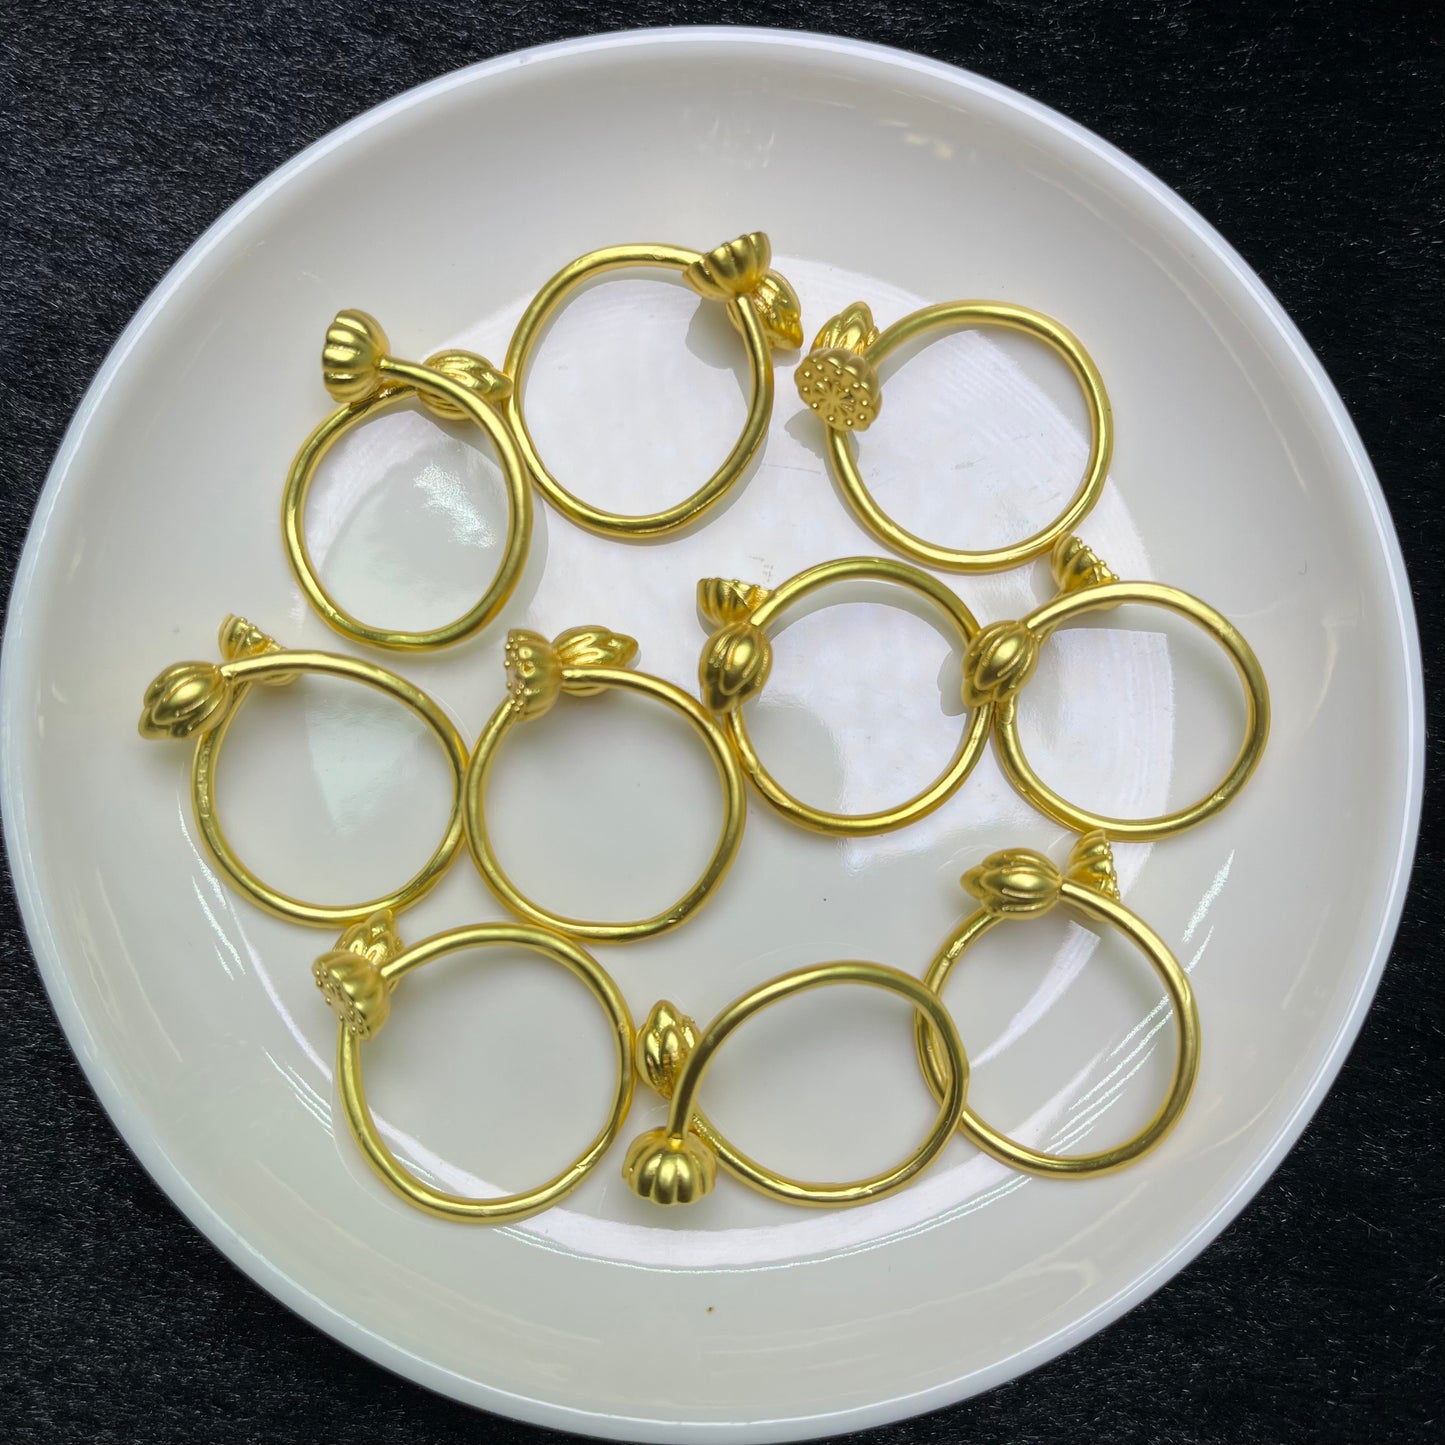 DIY Golden Lotus ring accessories